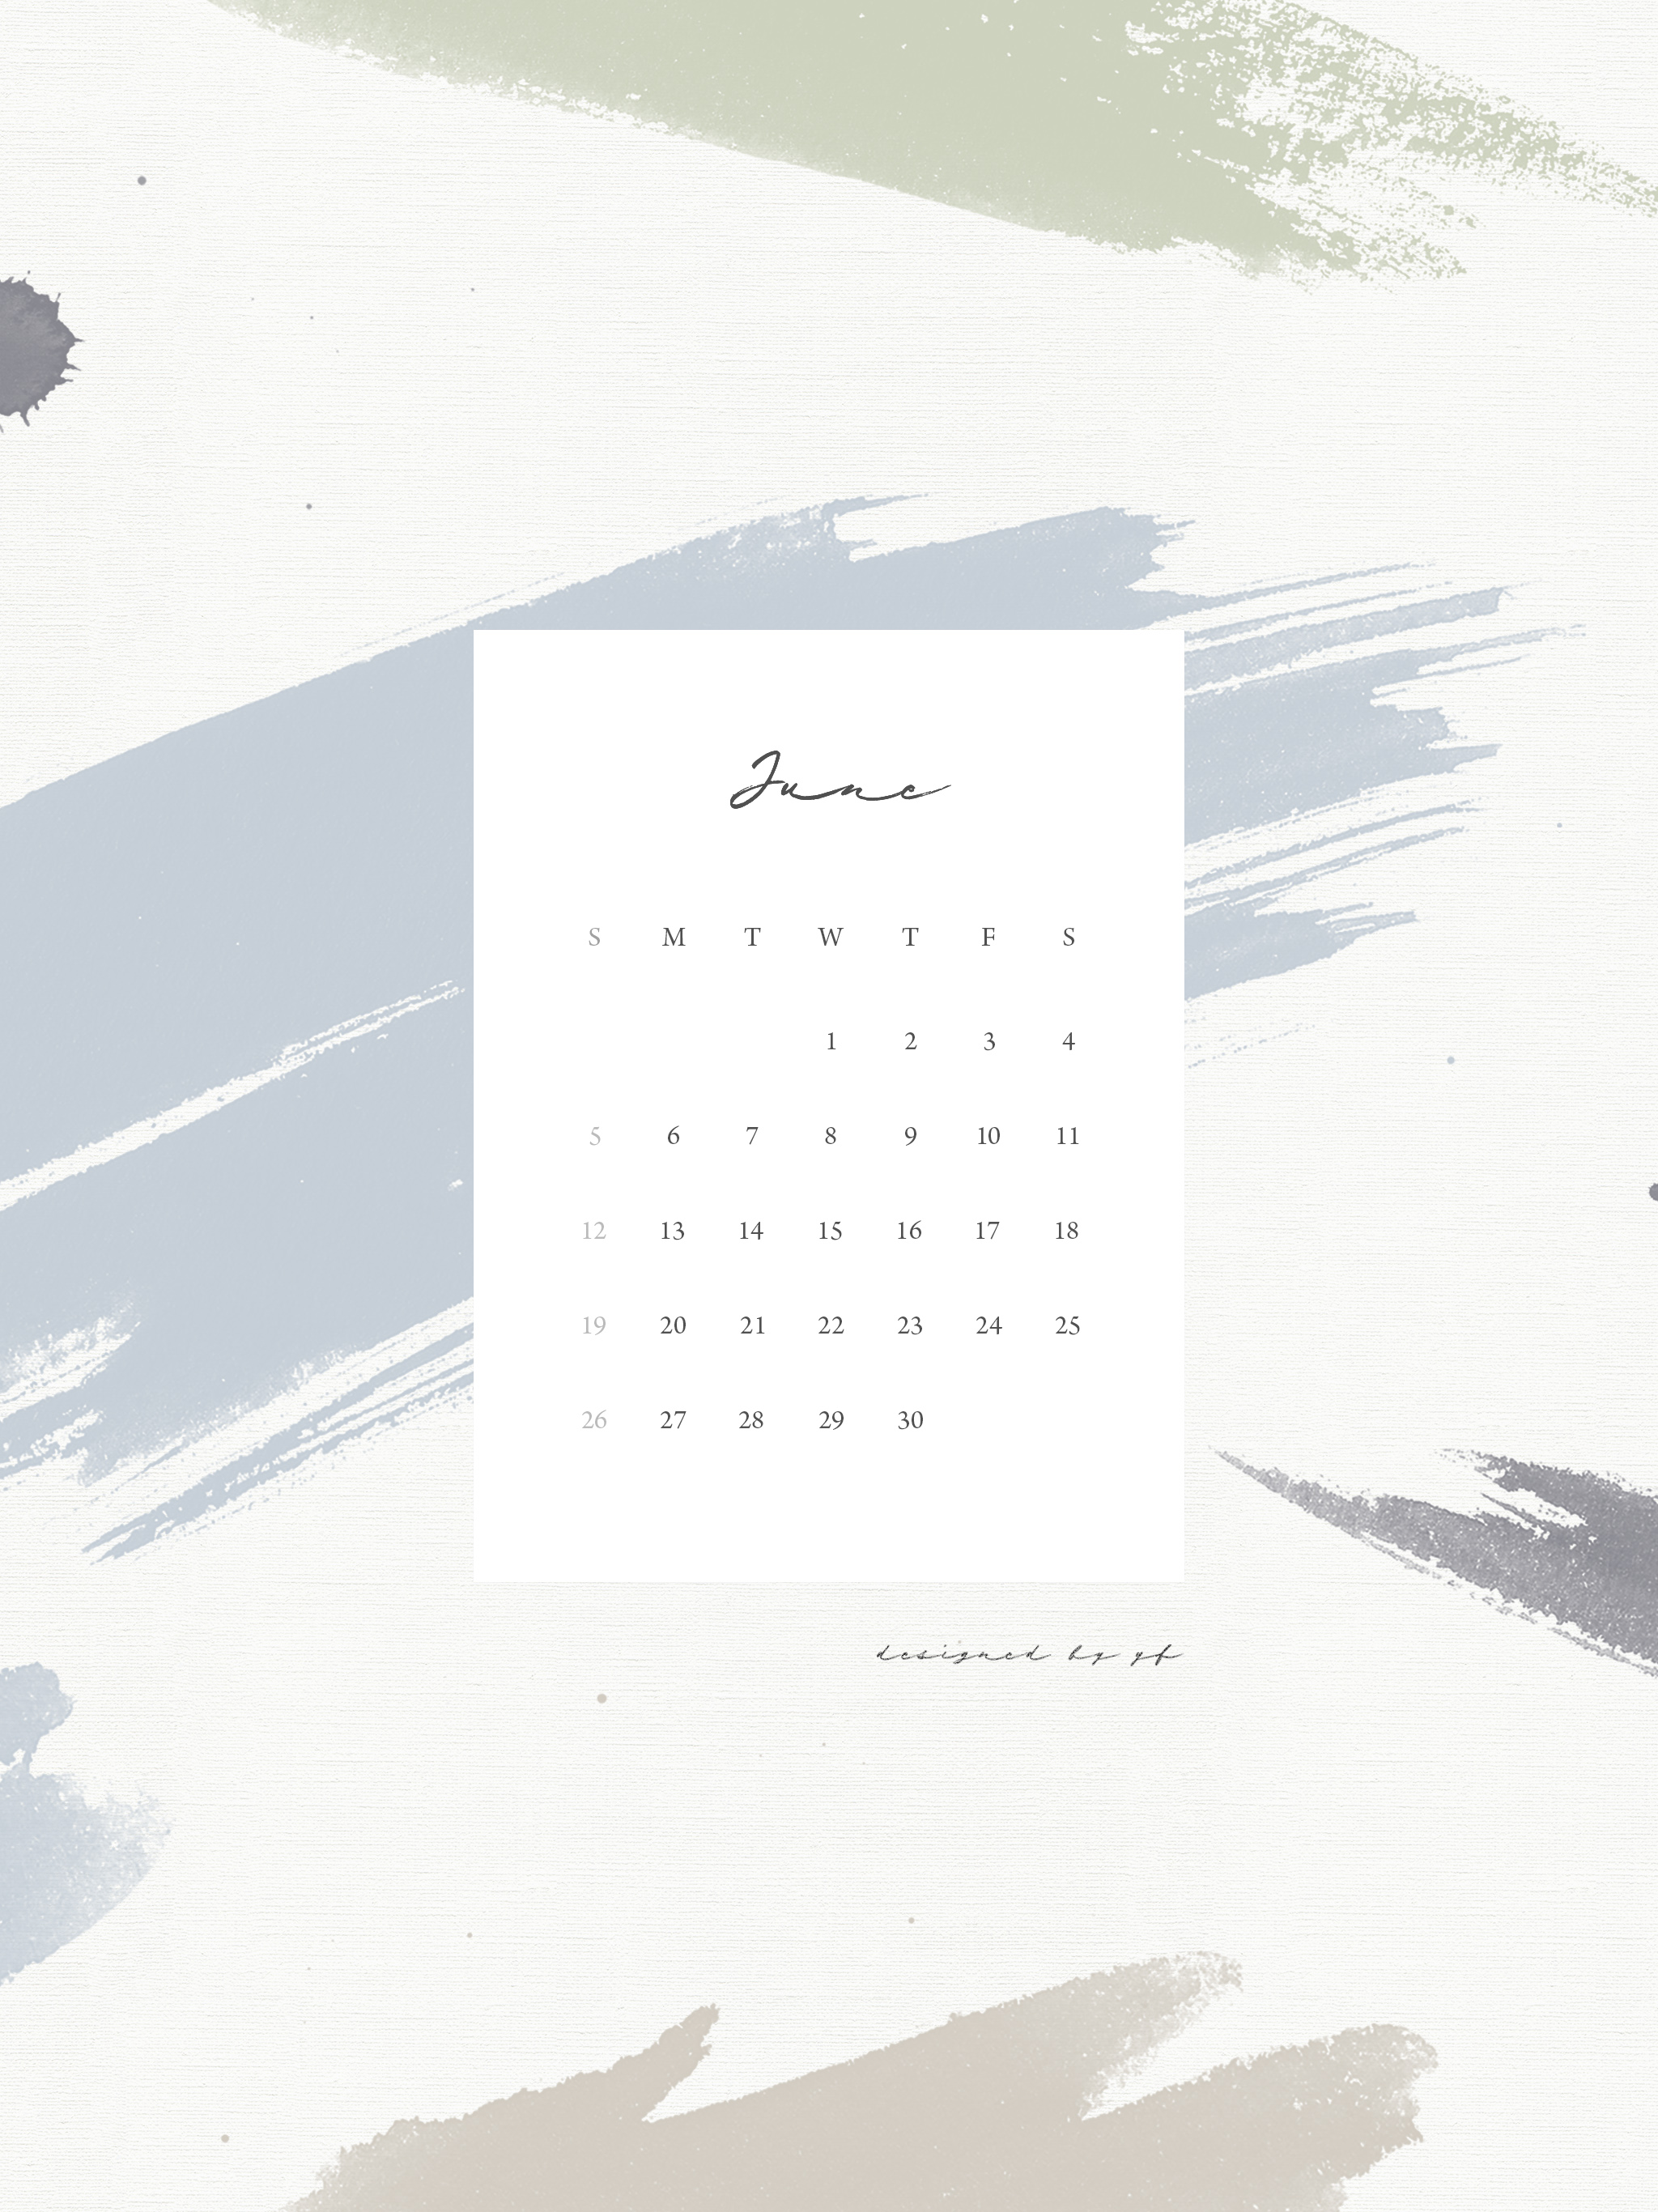 June 22 Calendar Wallpaper For The Ipad Design By Yf